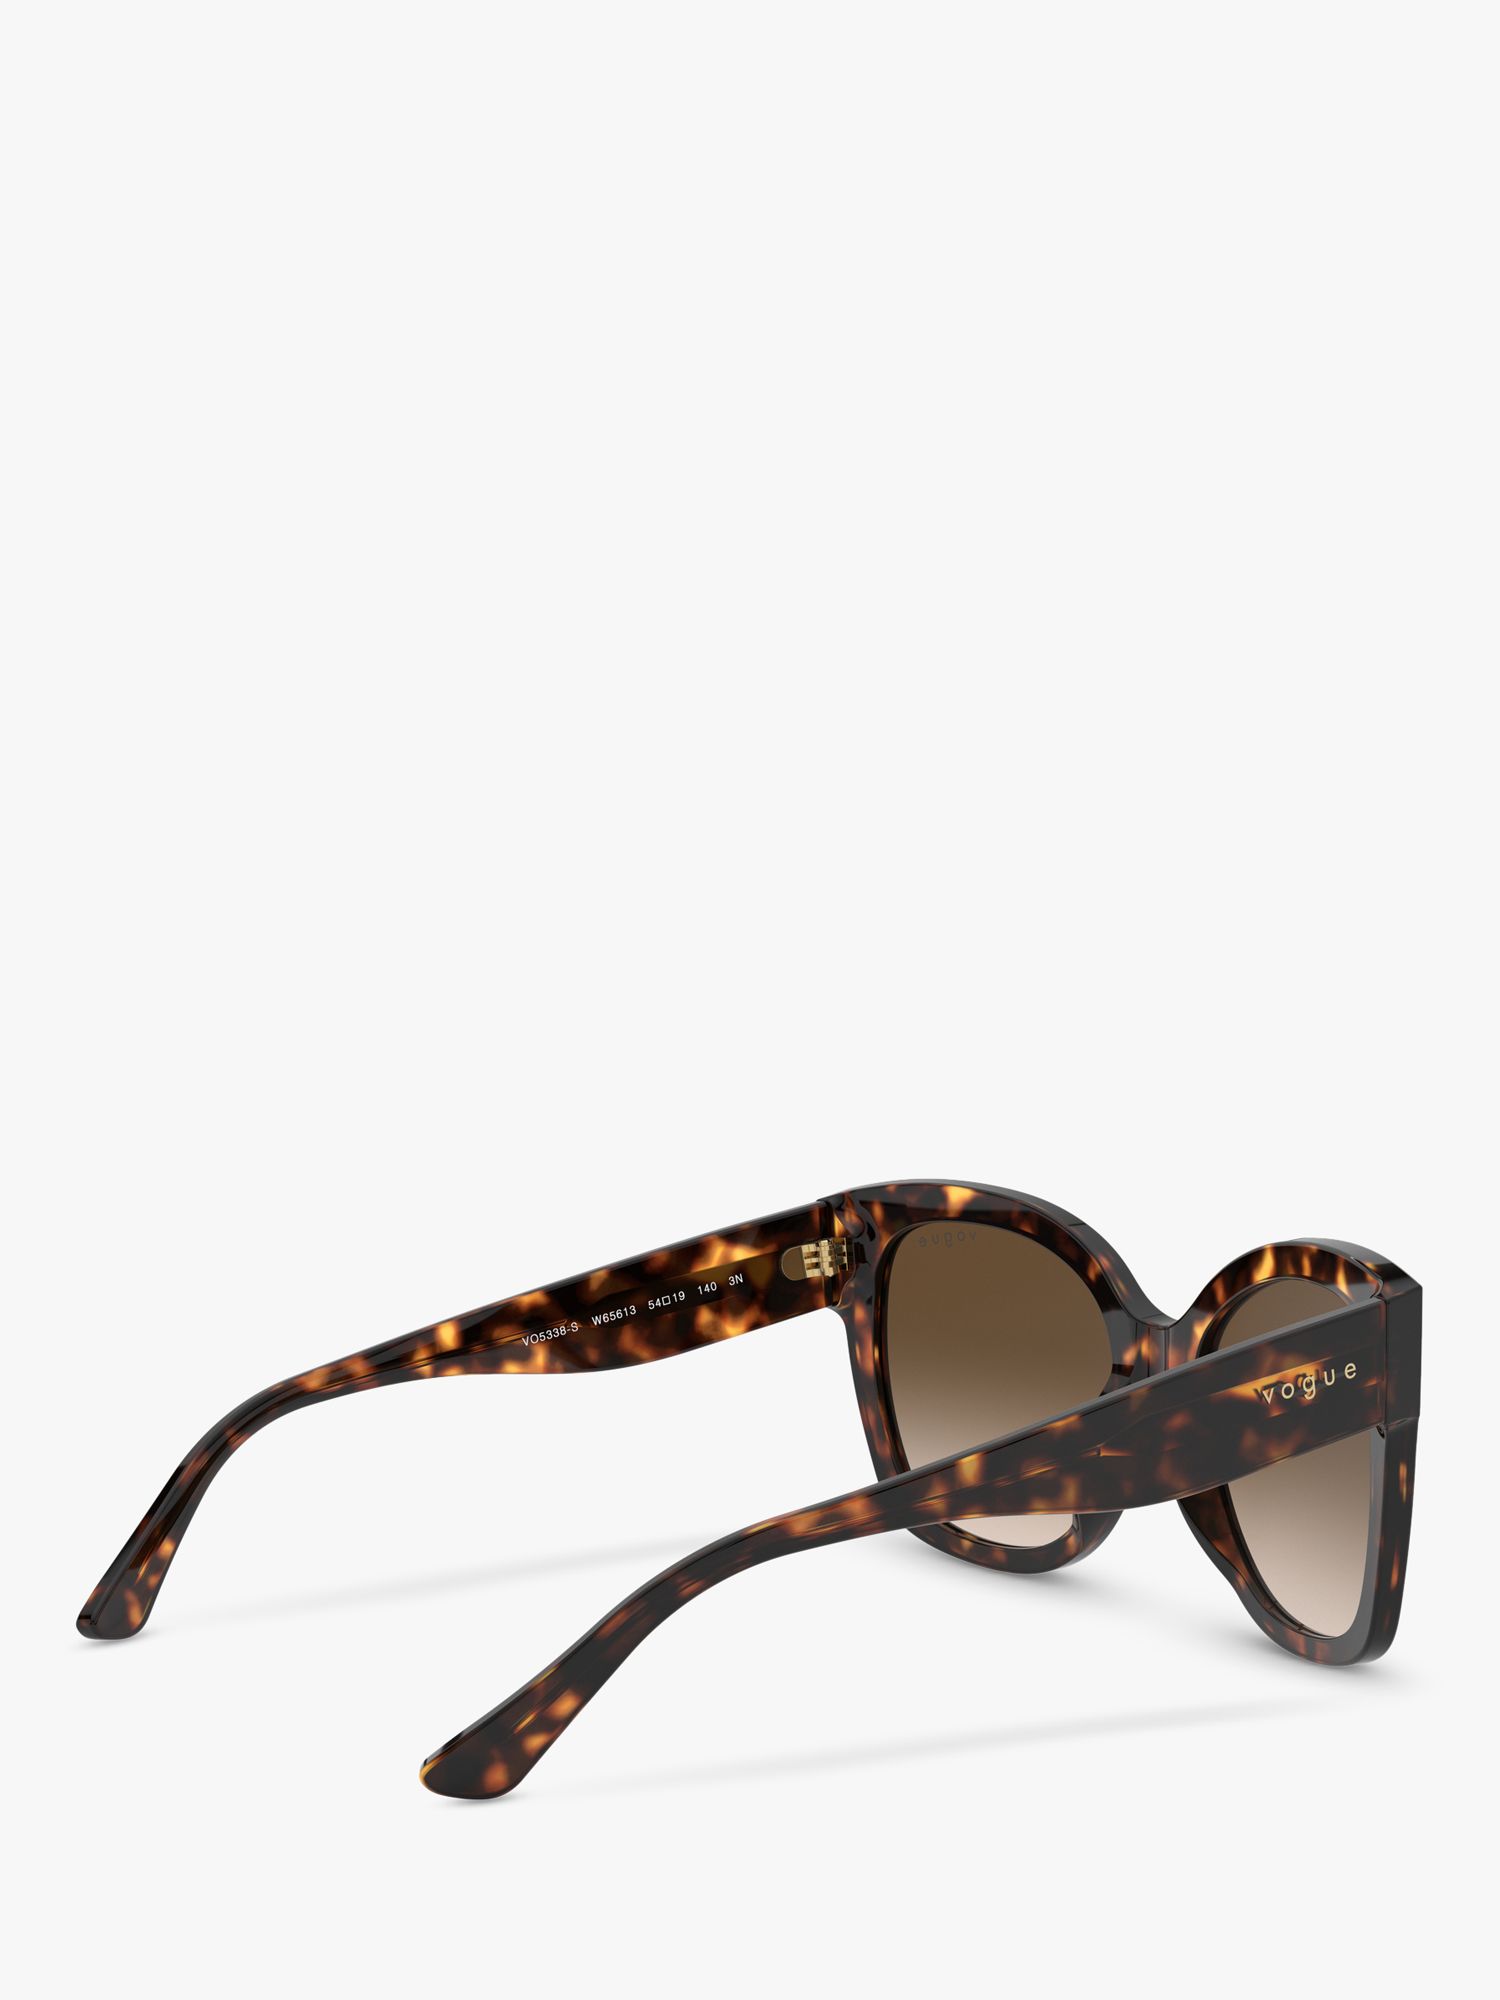 Buy Vogue VO5338S Women's Square Sunglasses, Dark Havana/Brown Gradient Online at johnlewis.com